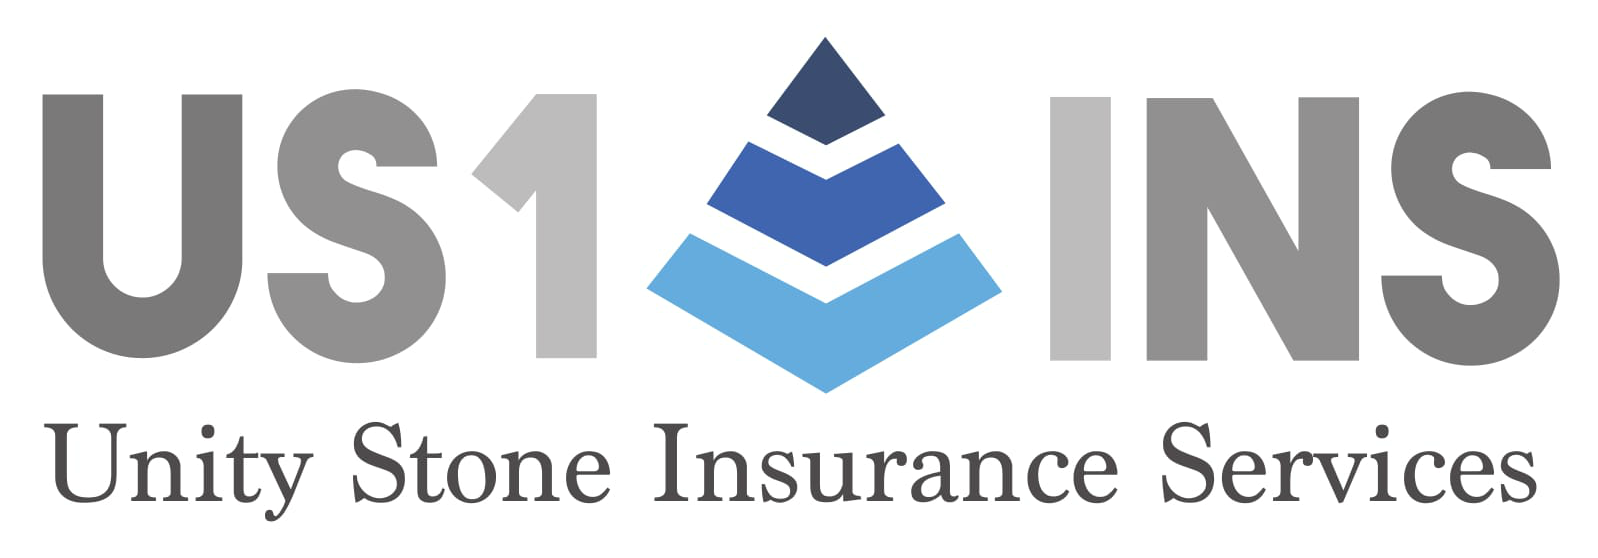 Unity Stone Insurance Services